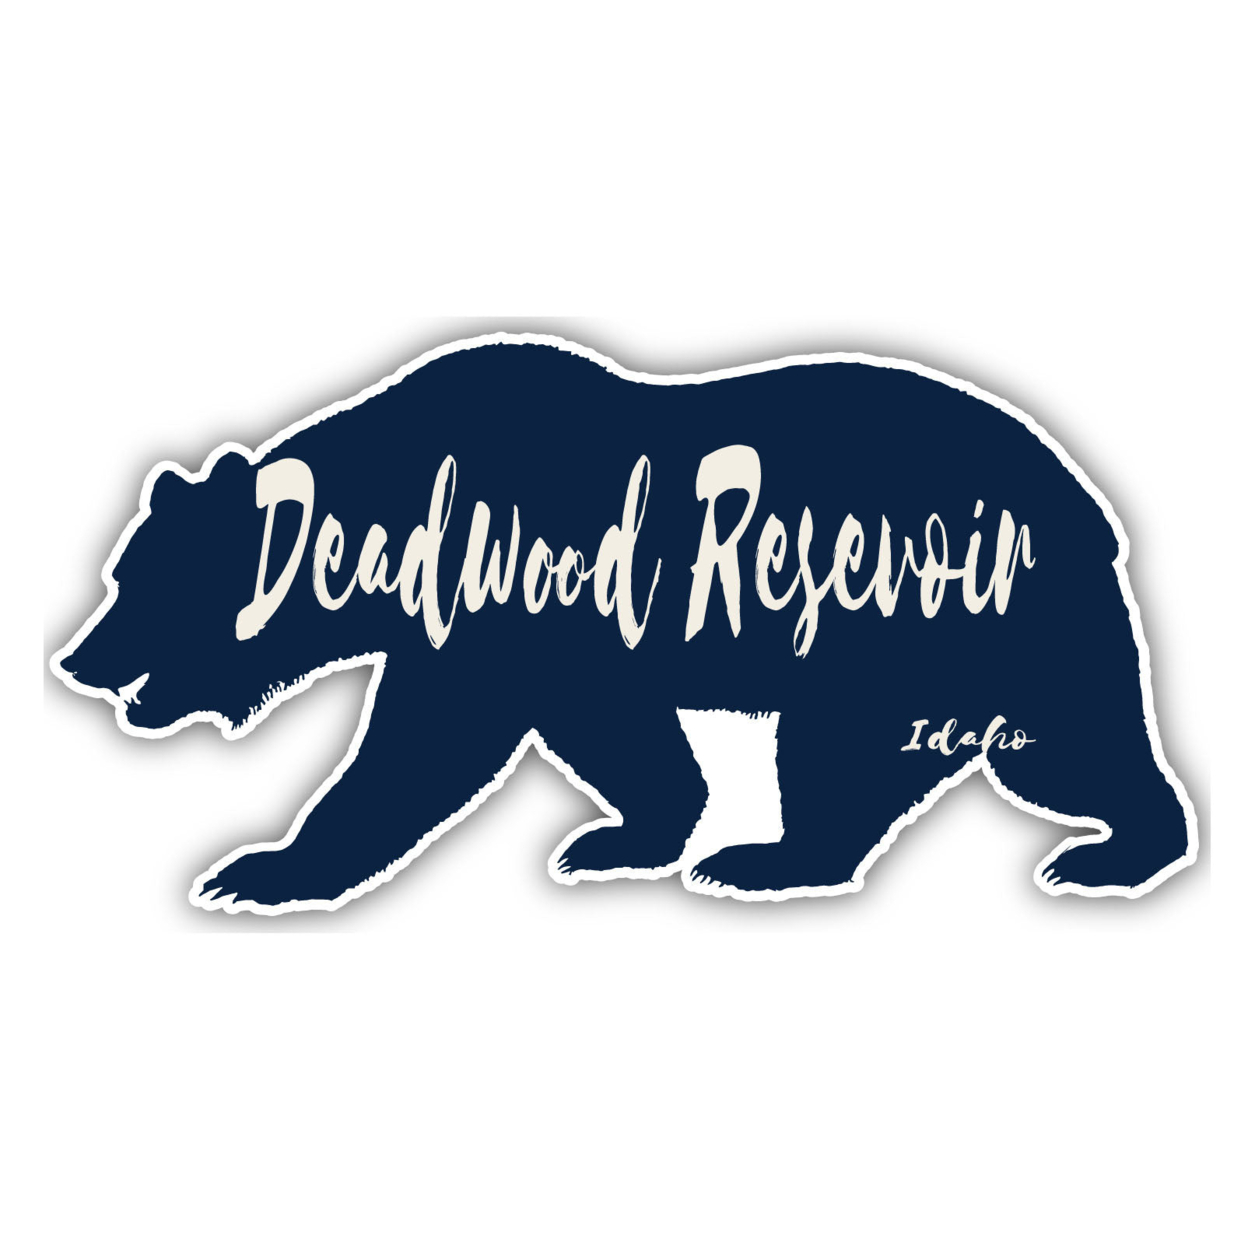 Deadwood Resevoir Idaho Souvenir Decorative Stickers (Choose Theme And Size) - Single Unit, 12-Inch, Bear